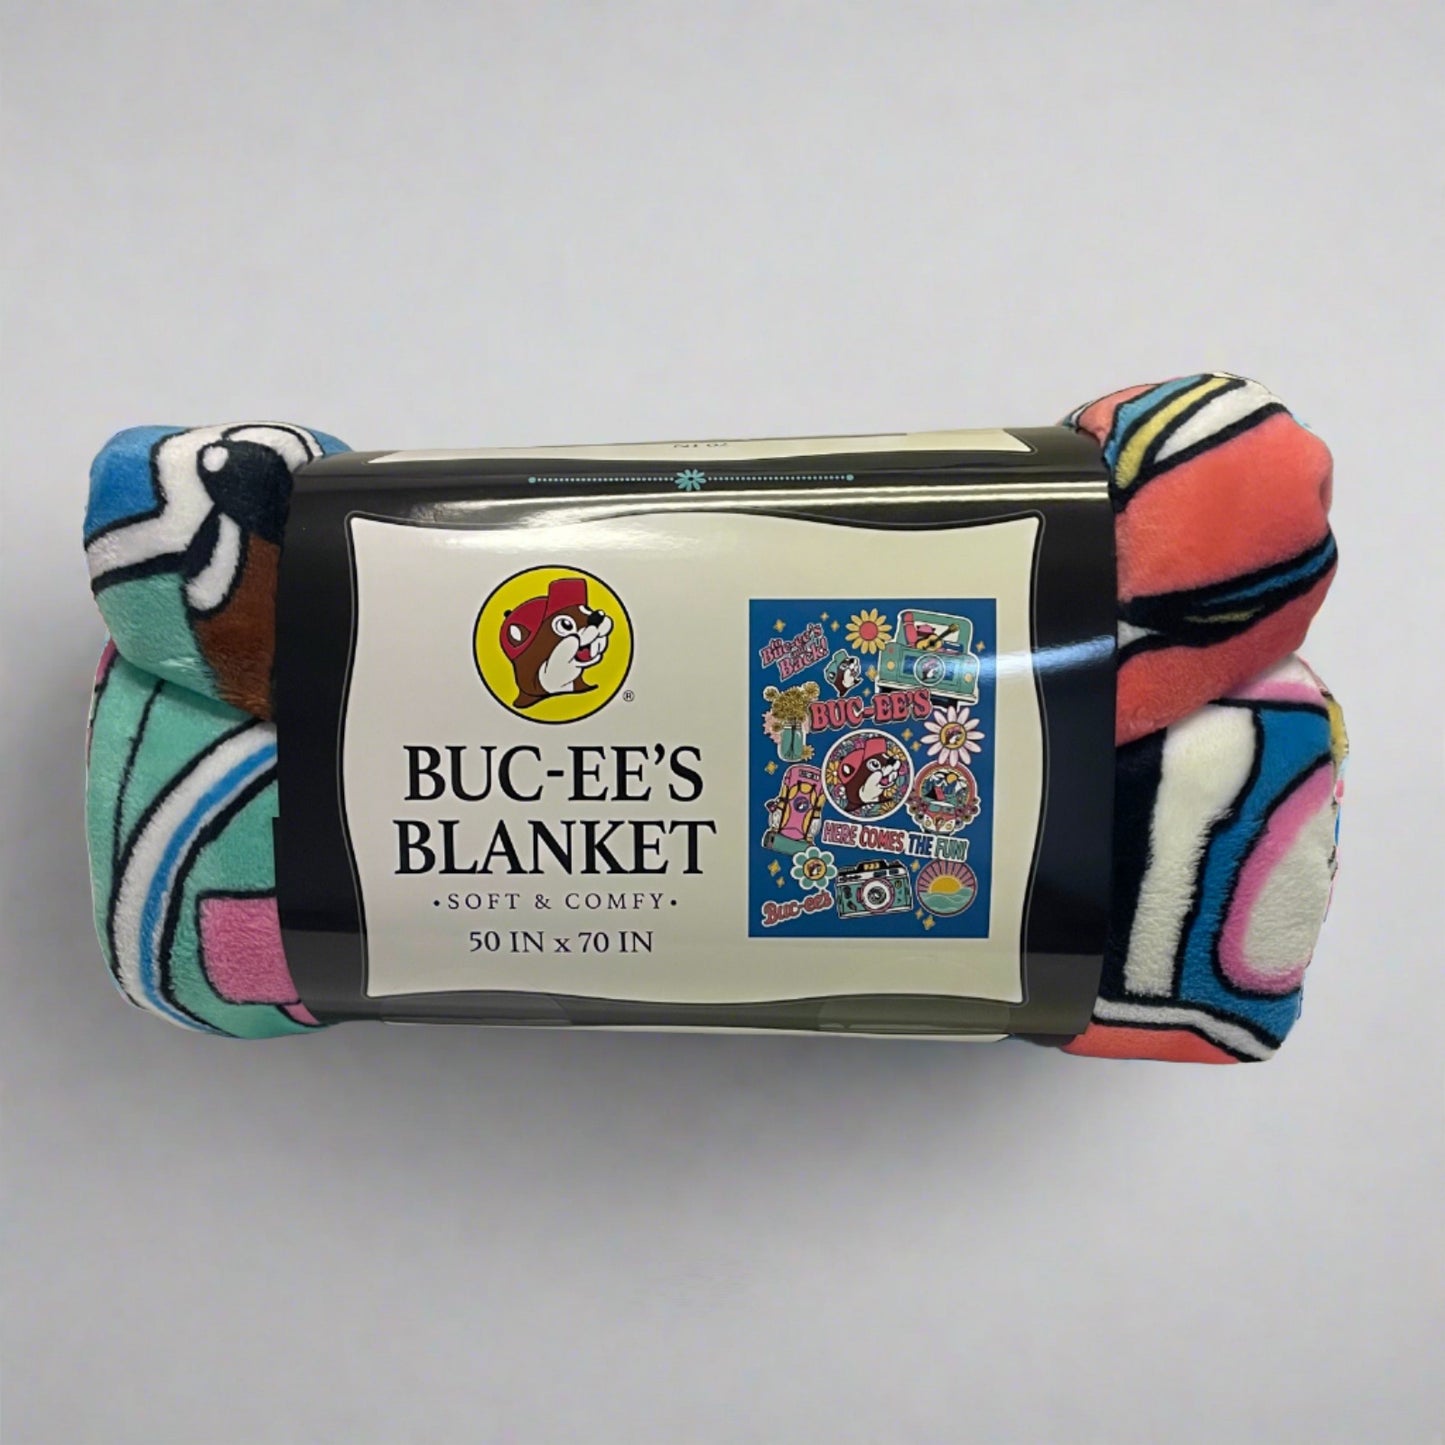 Buc-ee's "Sticker" Blanket